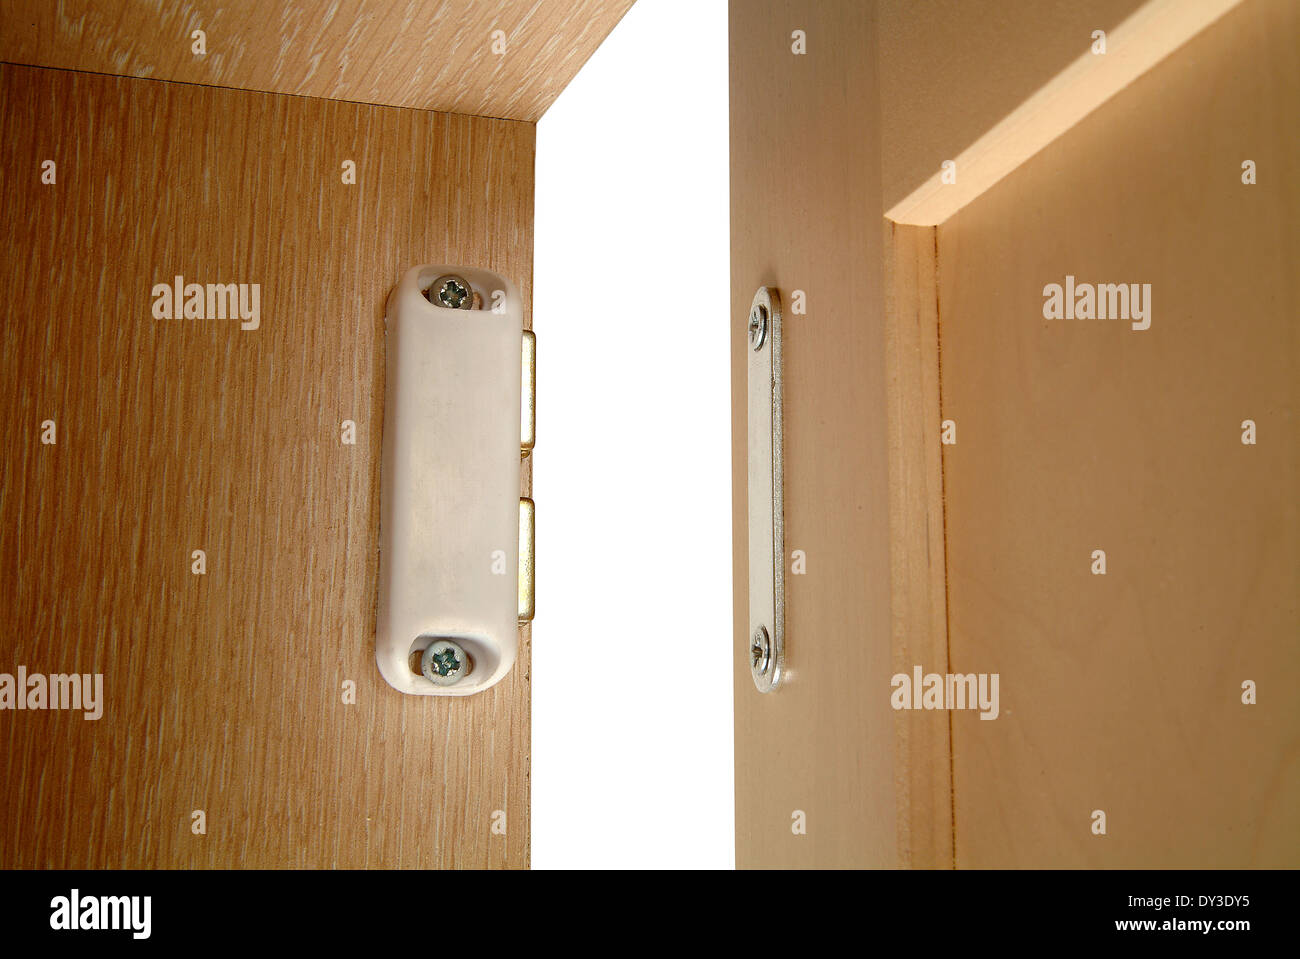 Magnetic Catch On Cabinet Door Stock Photo 68303625 Alamy